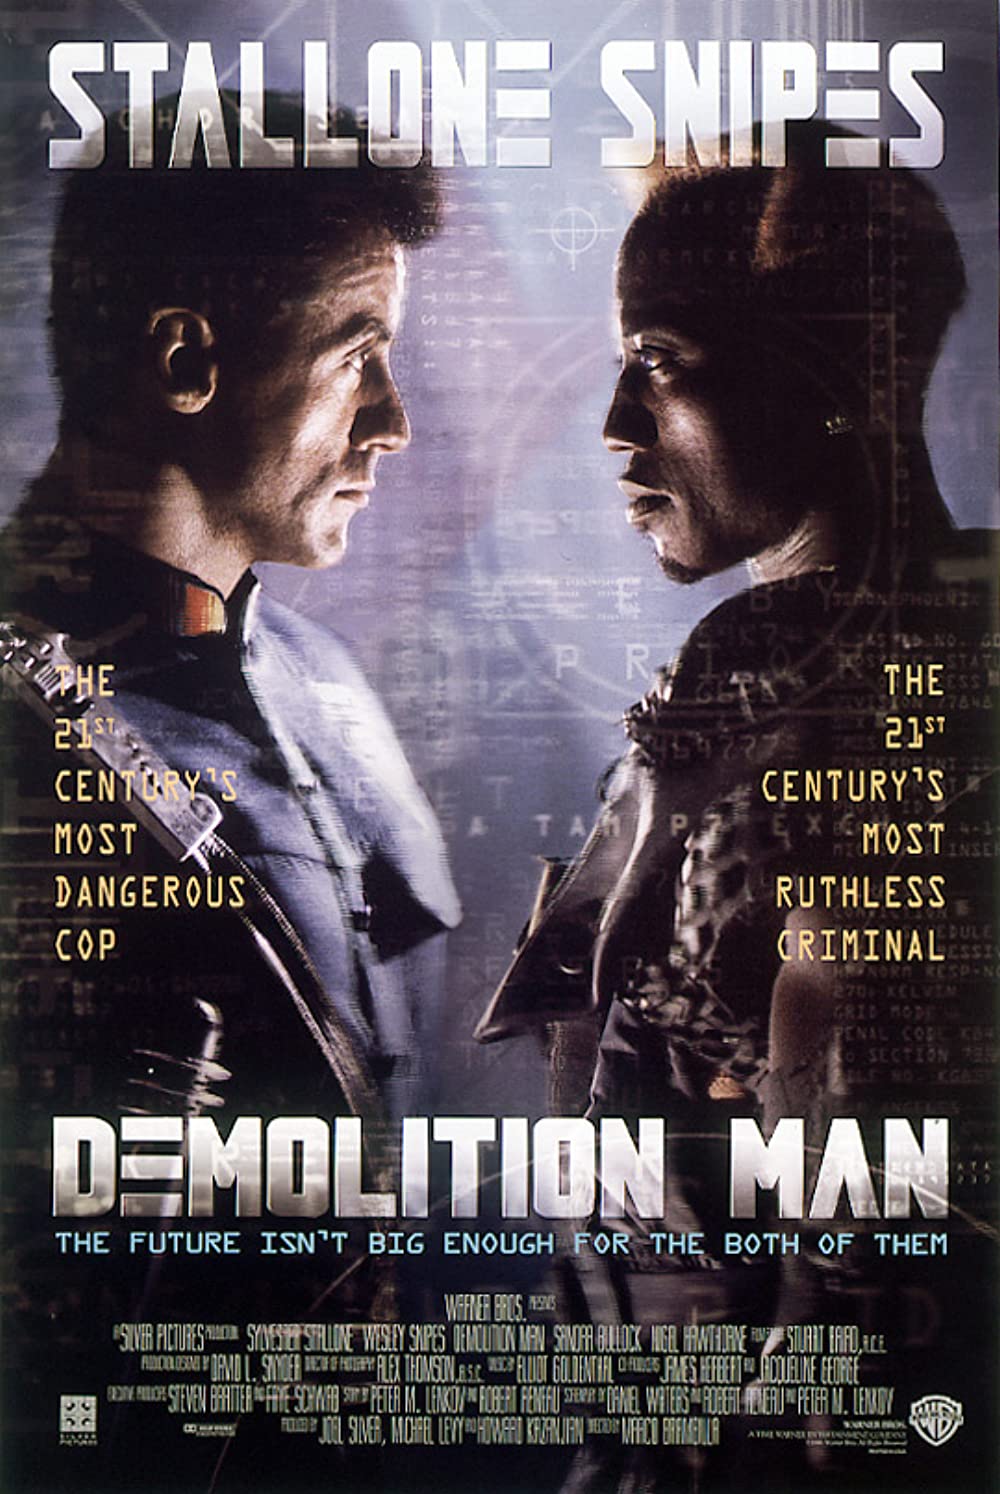 Stiahni si Filmy CZ/SK dabing Demolition Man (1993)(1080p)(BluRay)(EN/CZ) = CSFD 78%